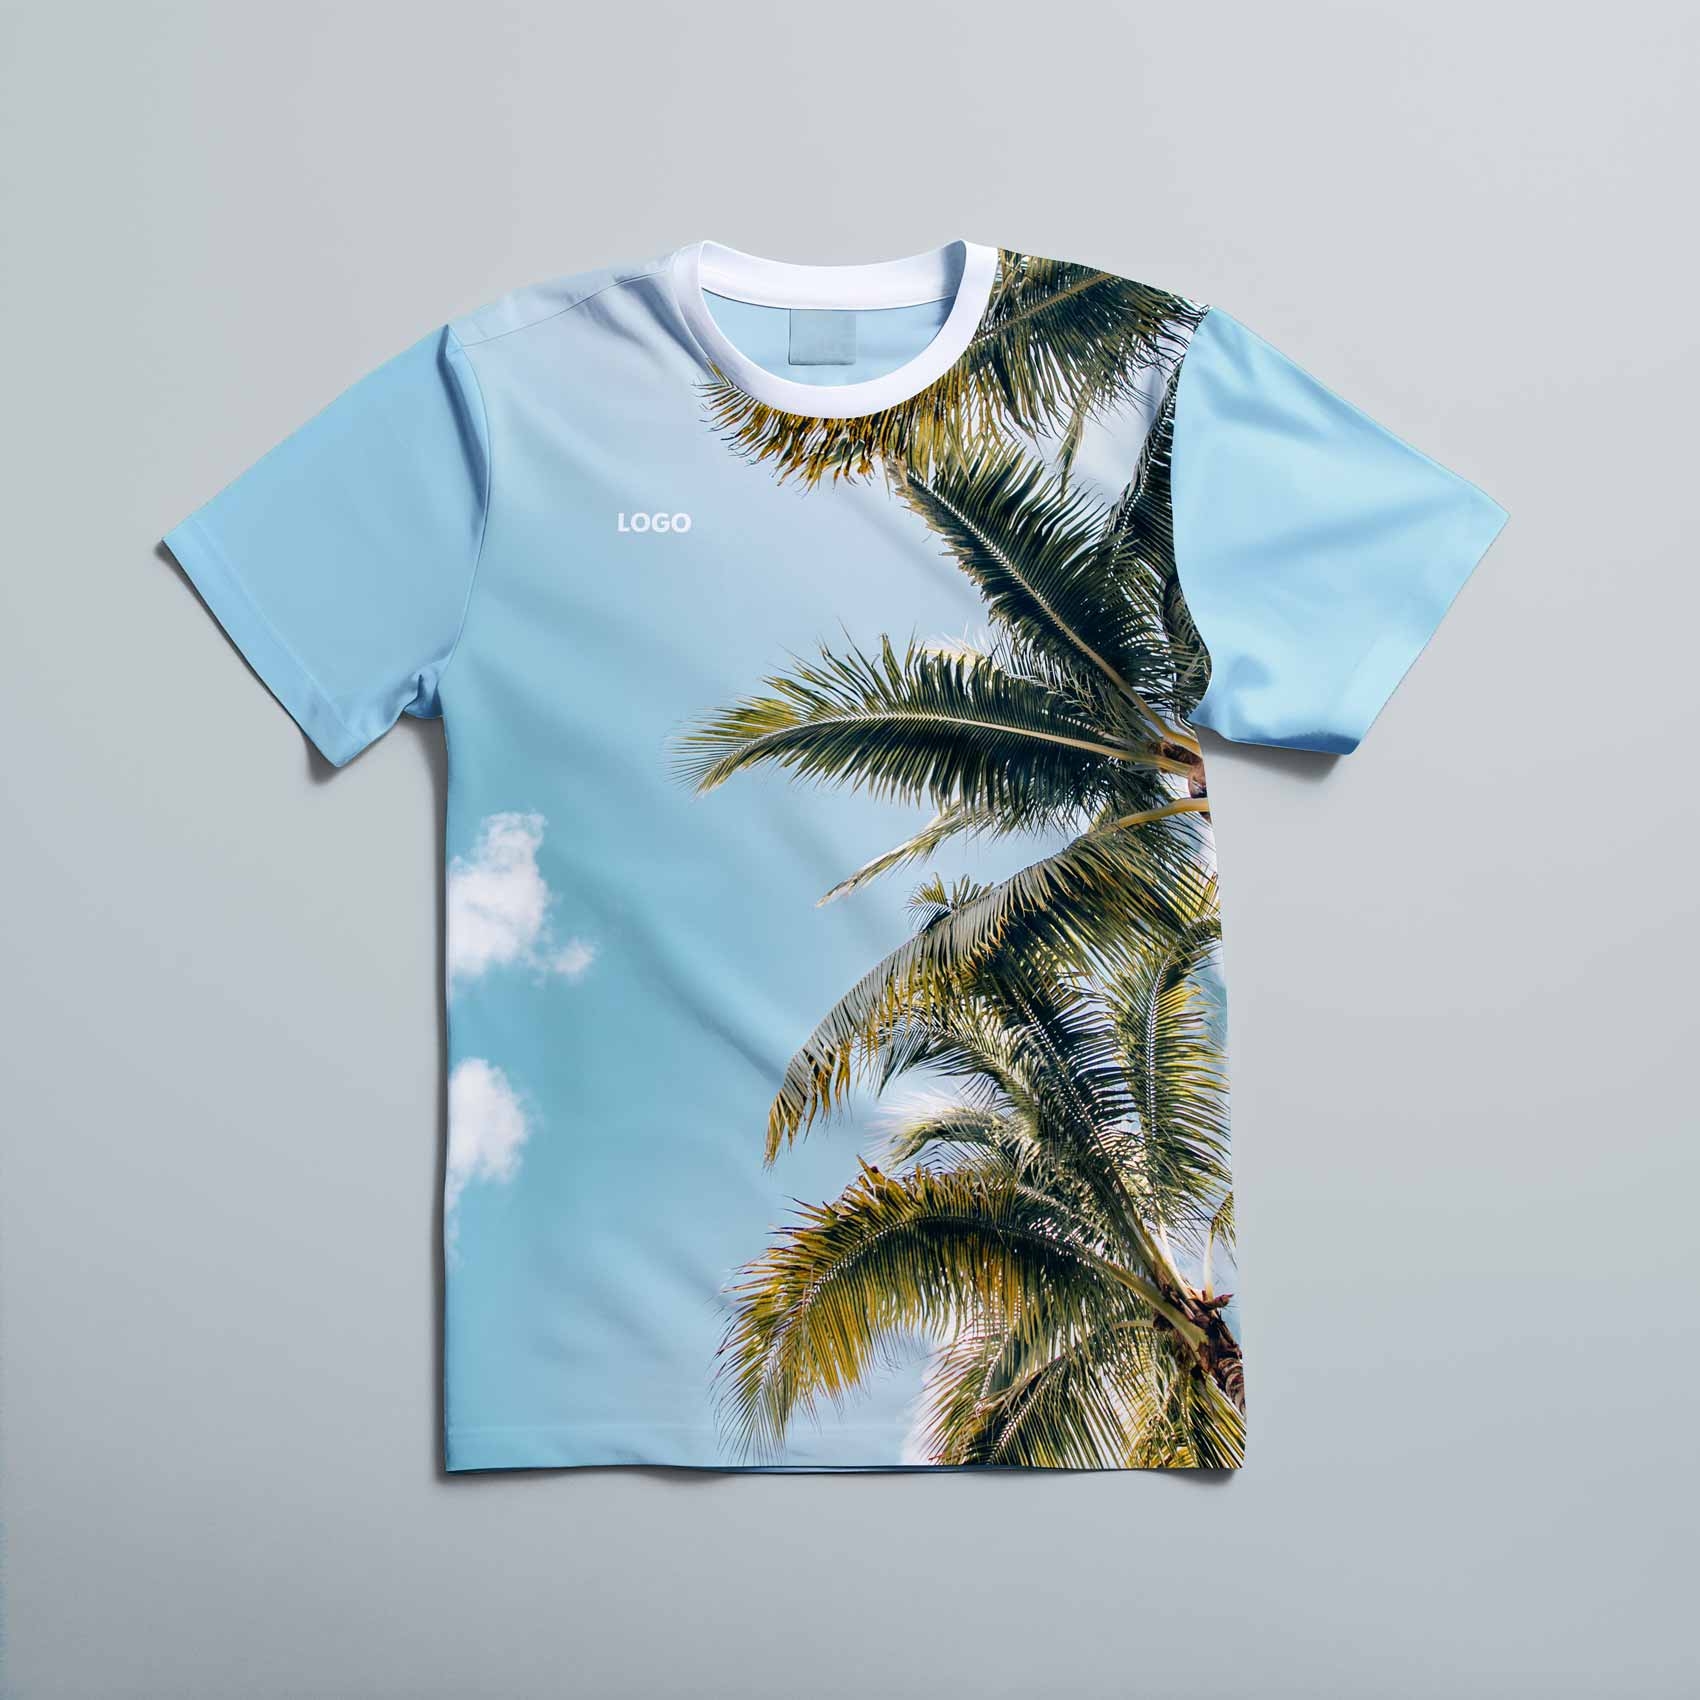 free white tshirt gildan bella canvas photoshop mockup displaying a customized t-shirt in a palm beach style